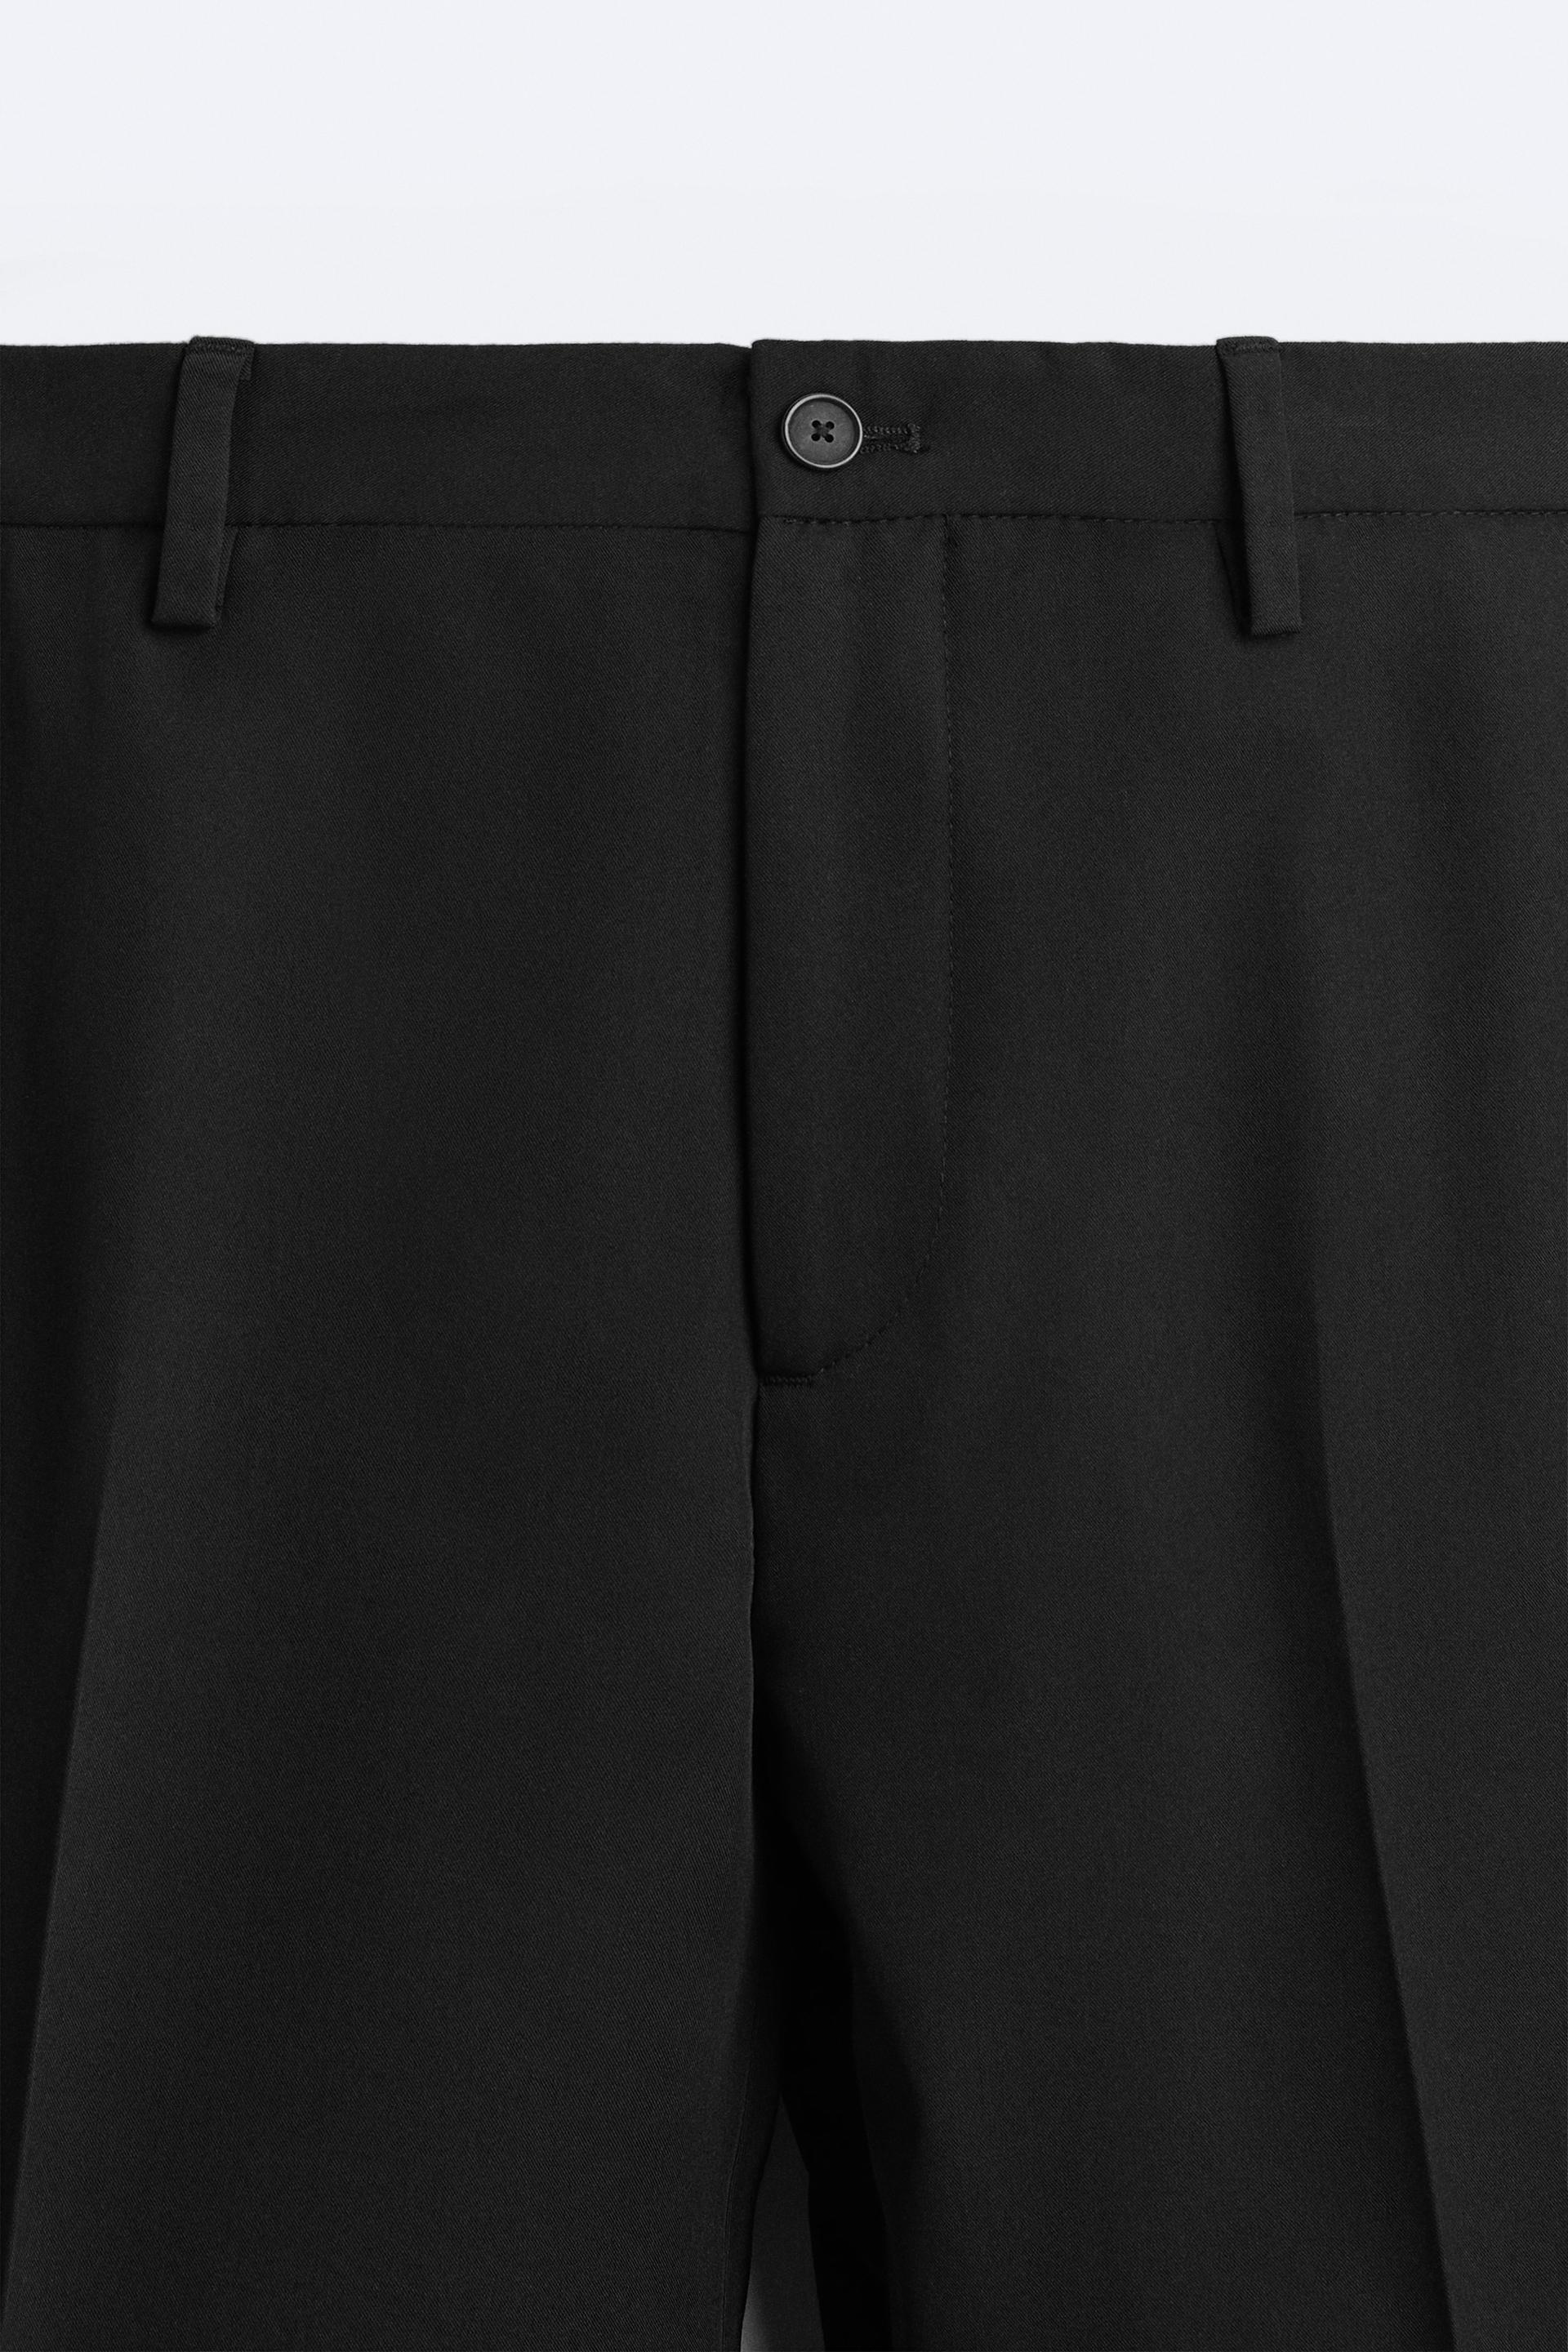 Zara Pants Size 32 35Wx34L Men's Zara Man Basic Dress Pants Gray Work Pants  EUC Measurements In Description for Sale in Los Angeles, CA - OfferUp